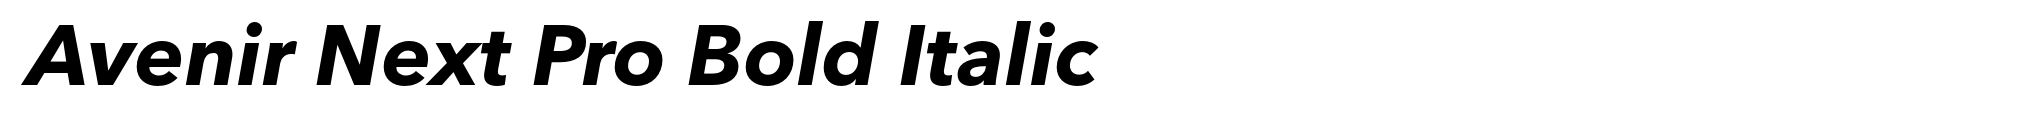 Avenir Next Pro Bold Italic image